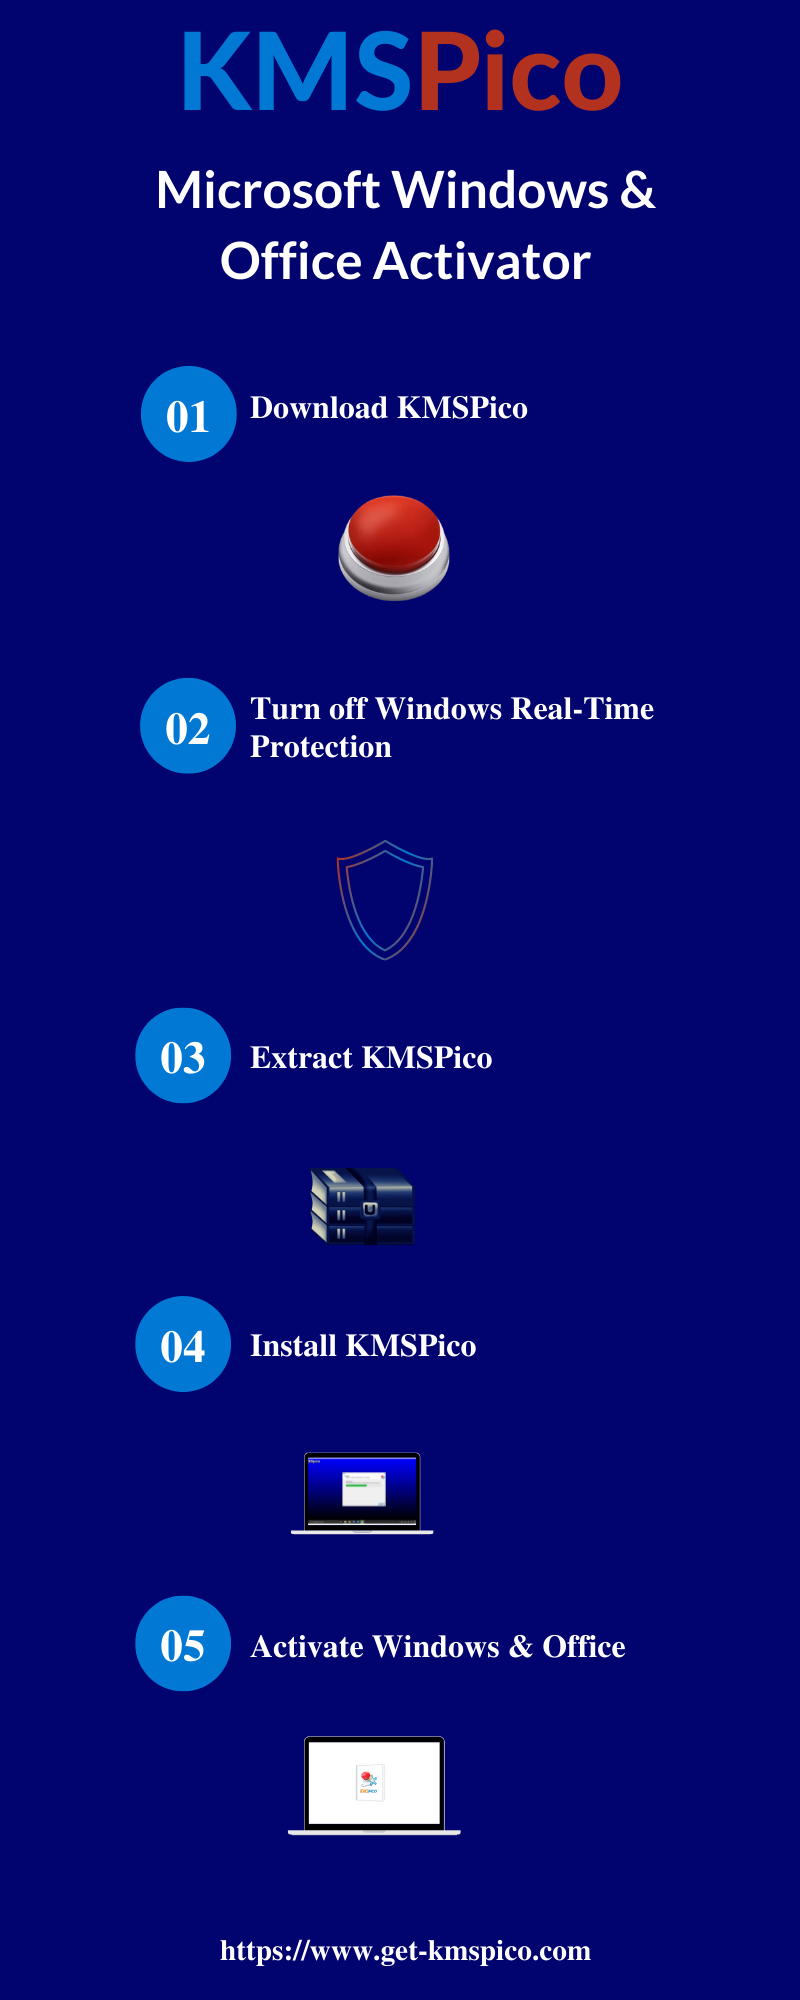 KMSPico-Download-Windows-10-Activator-Guideline